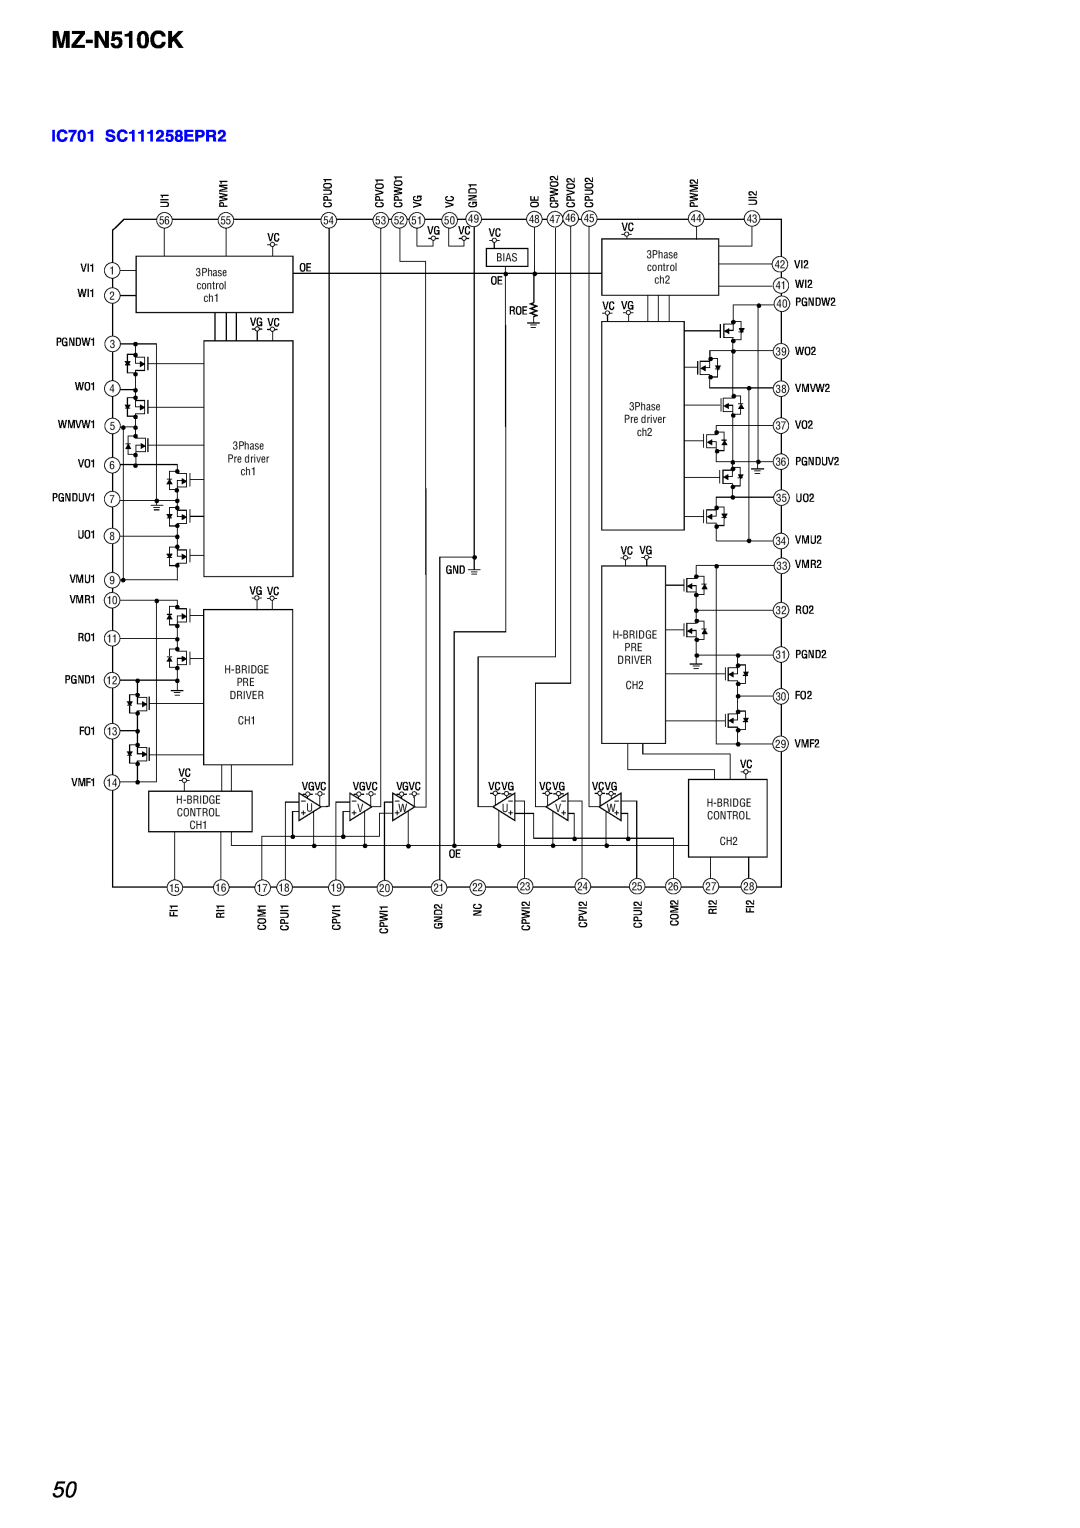 Sony MZ-N510CK service manual IC701 SC111258EPR2 